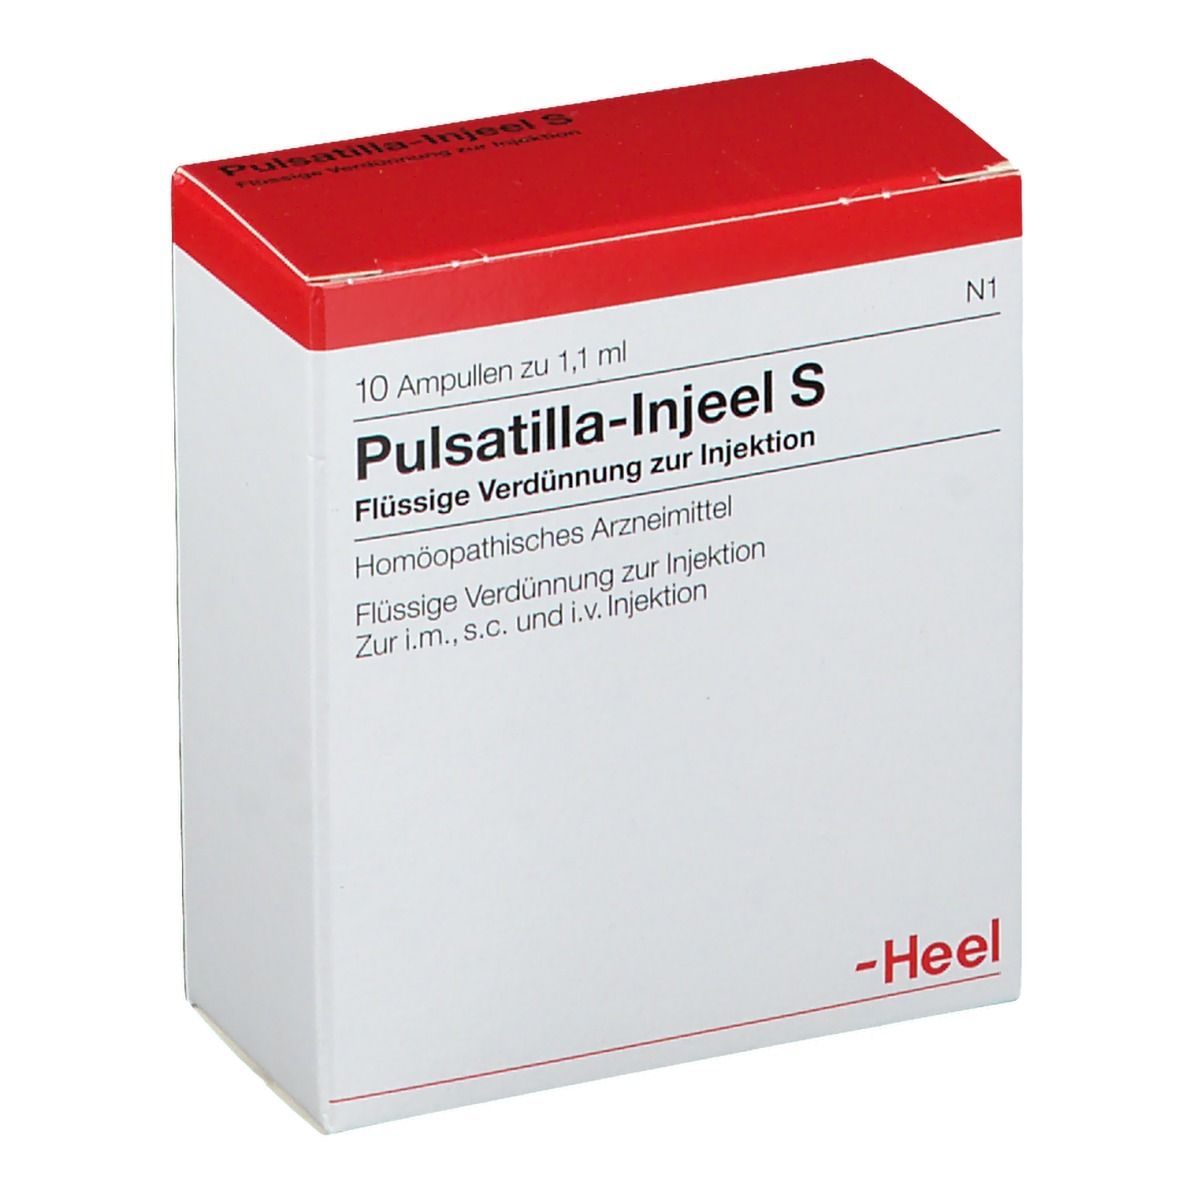 Pulsatilla-Injeel® S Ampullen